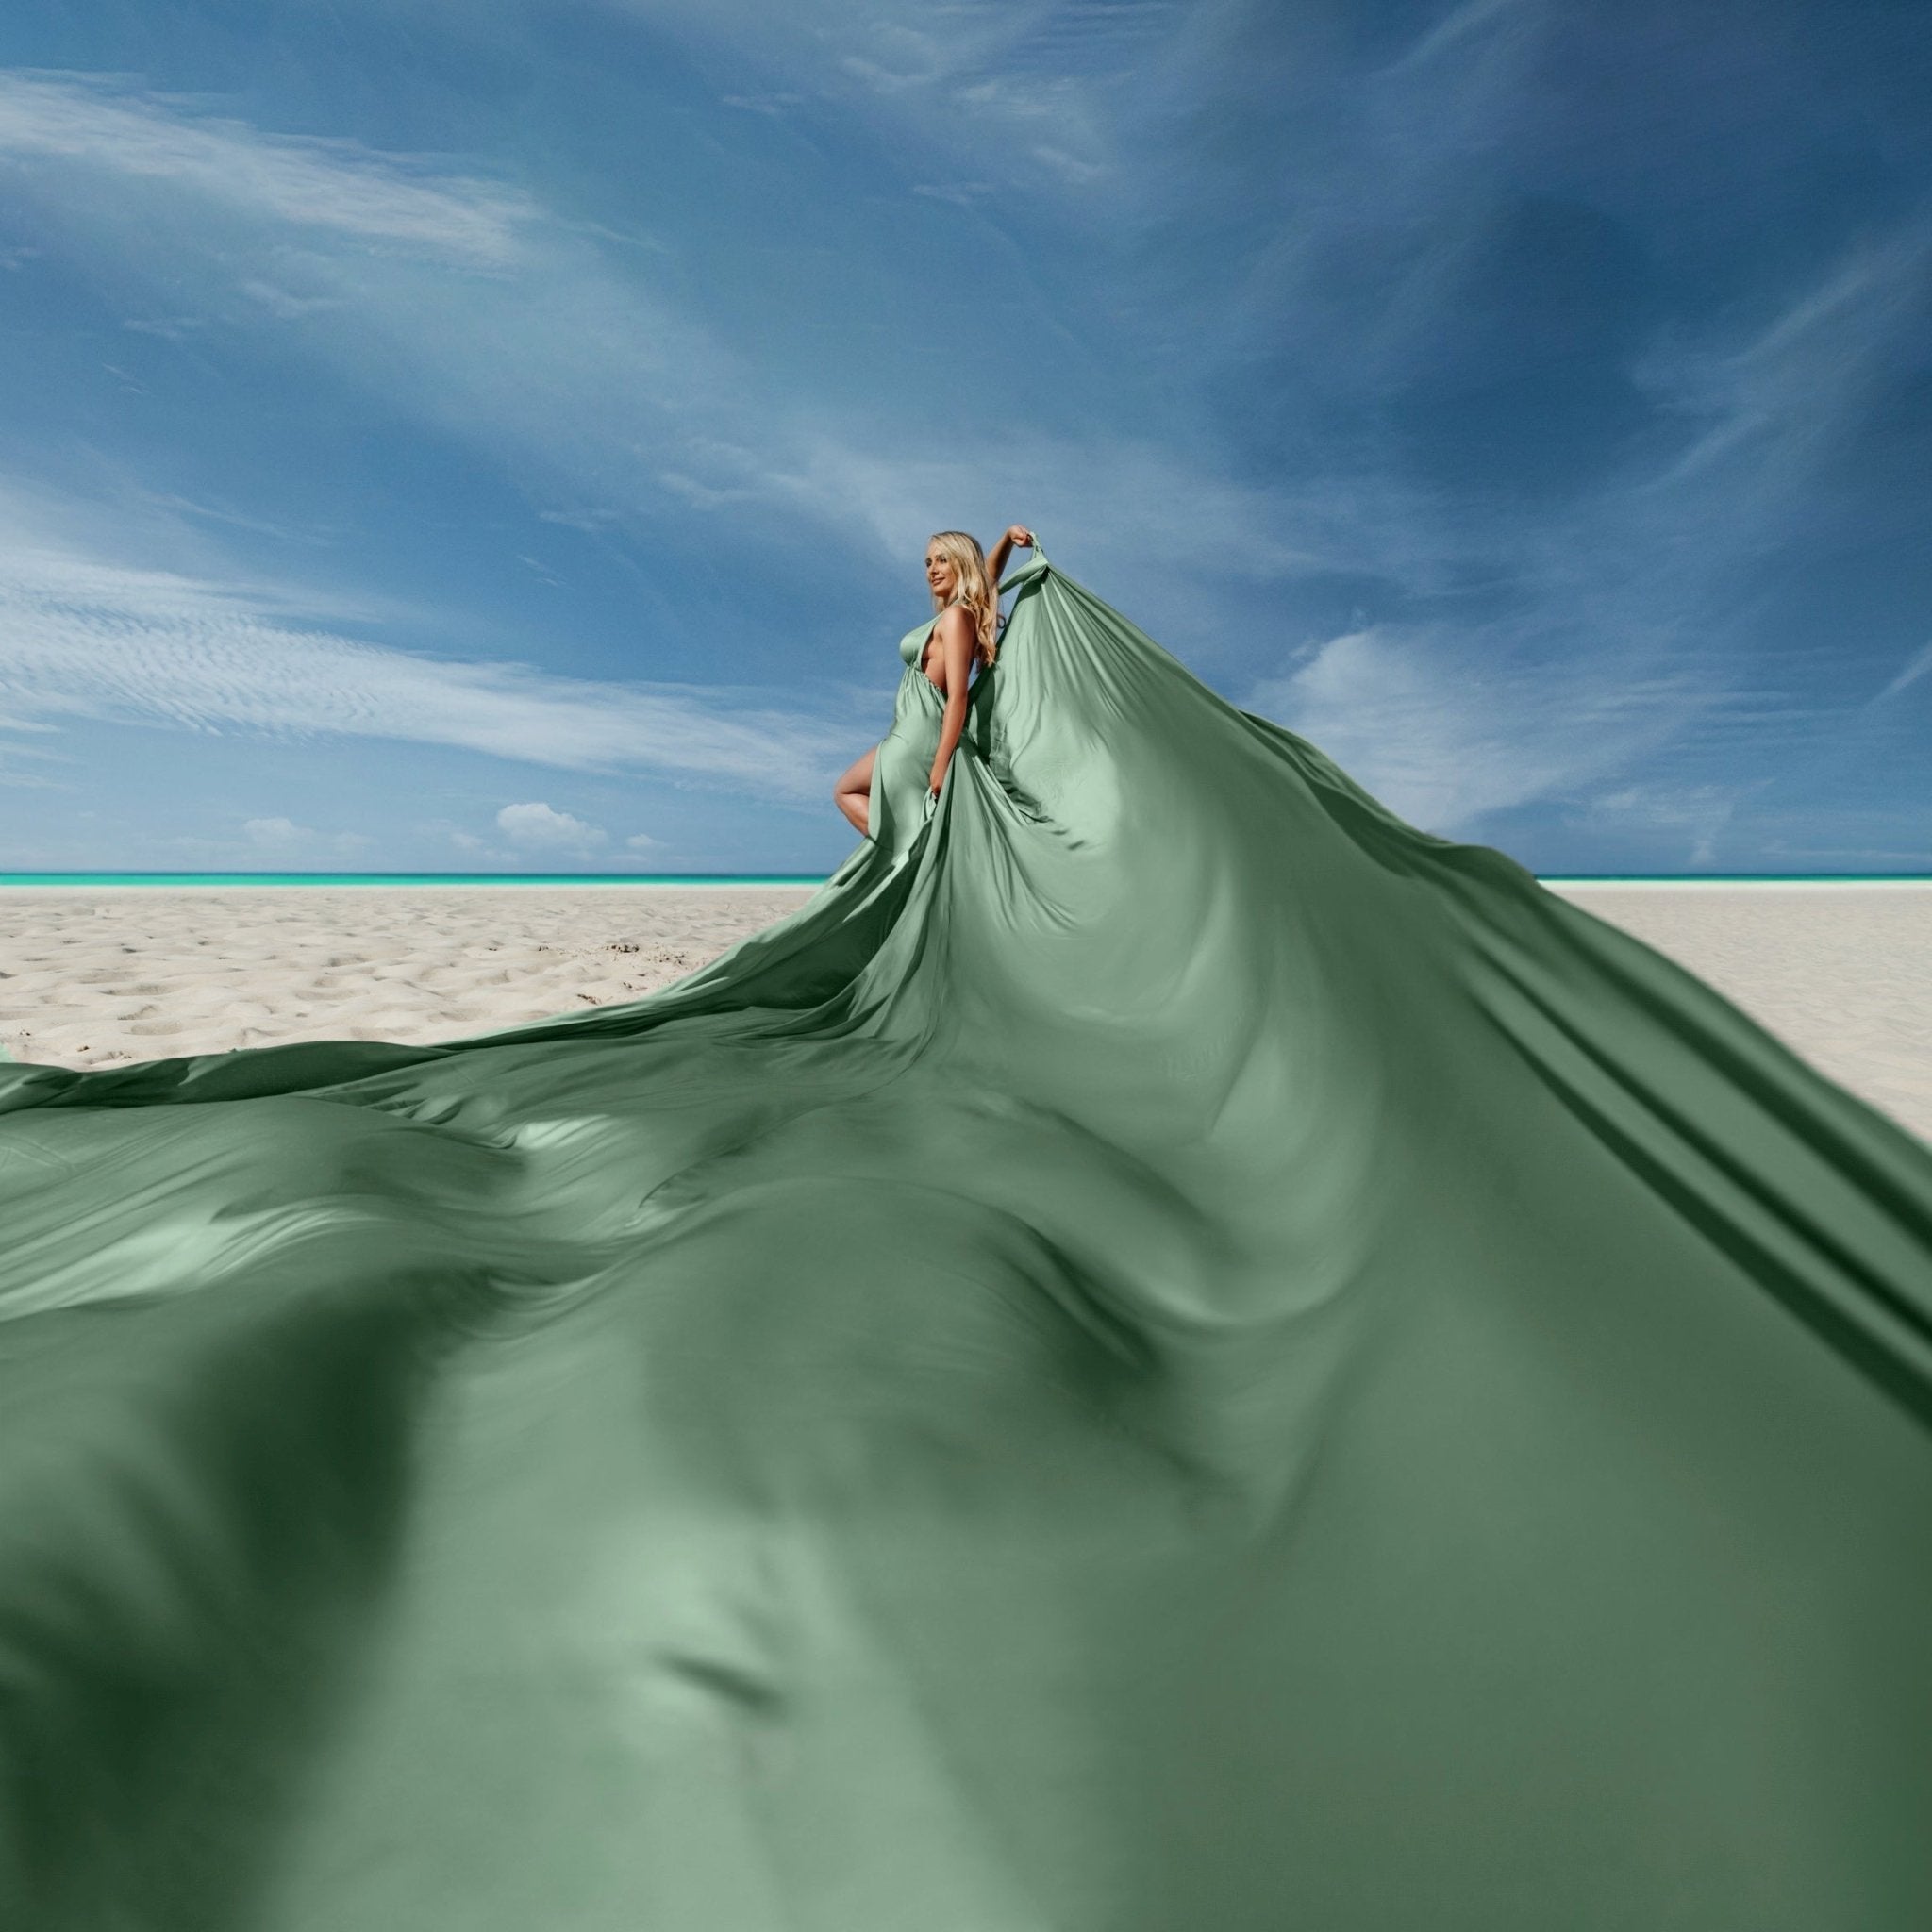 Flying Dress Photoshoot Santorini - Lansy Flying Dress